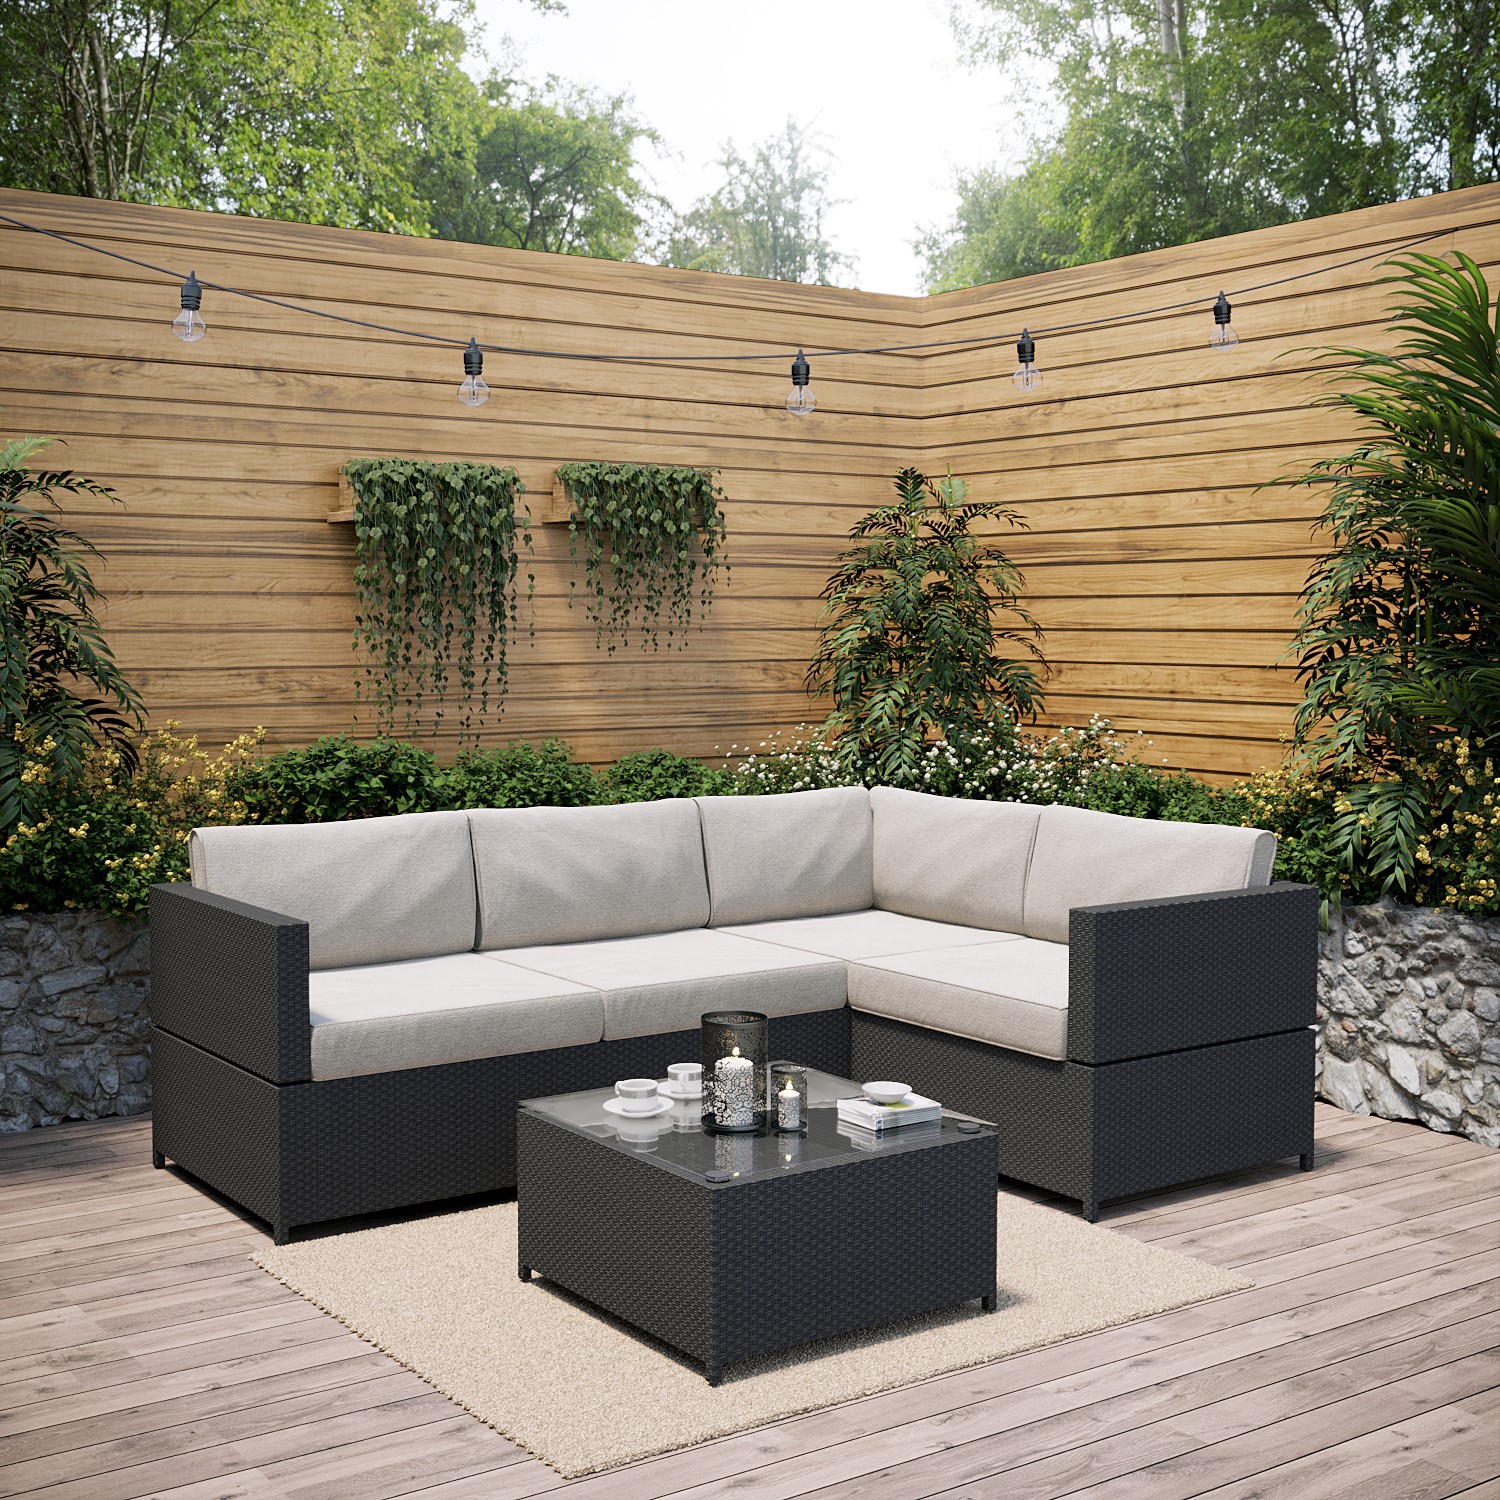 Rattan Corner Sofa and Table Set in Black - Garden Furniture